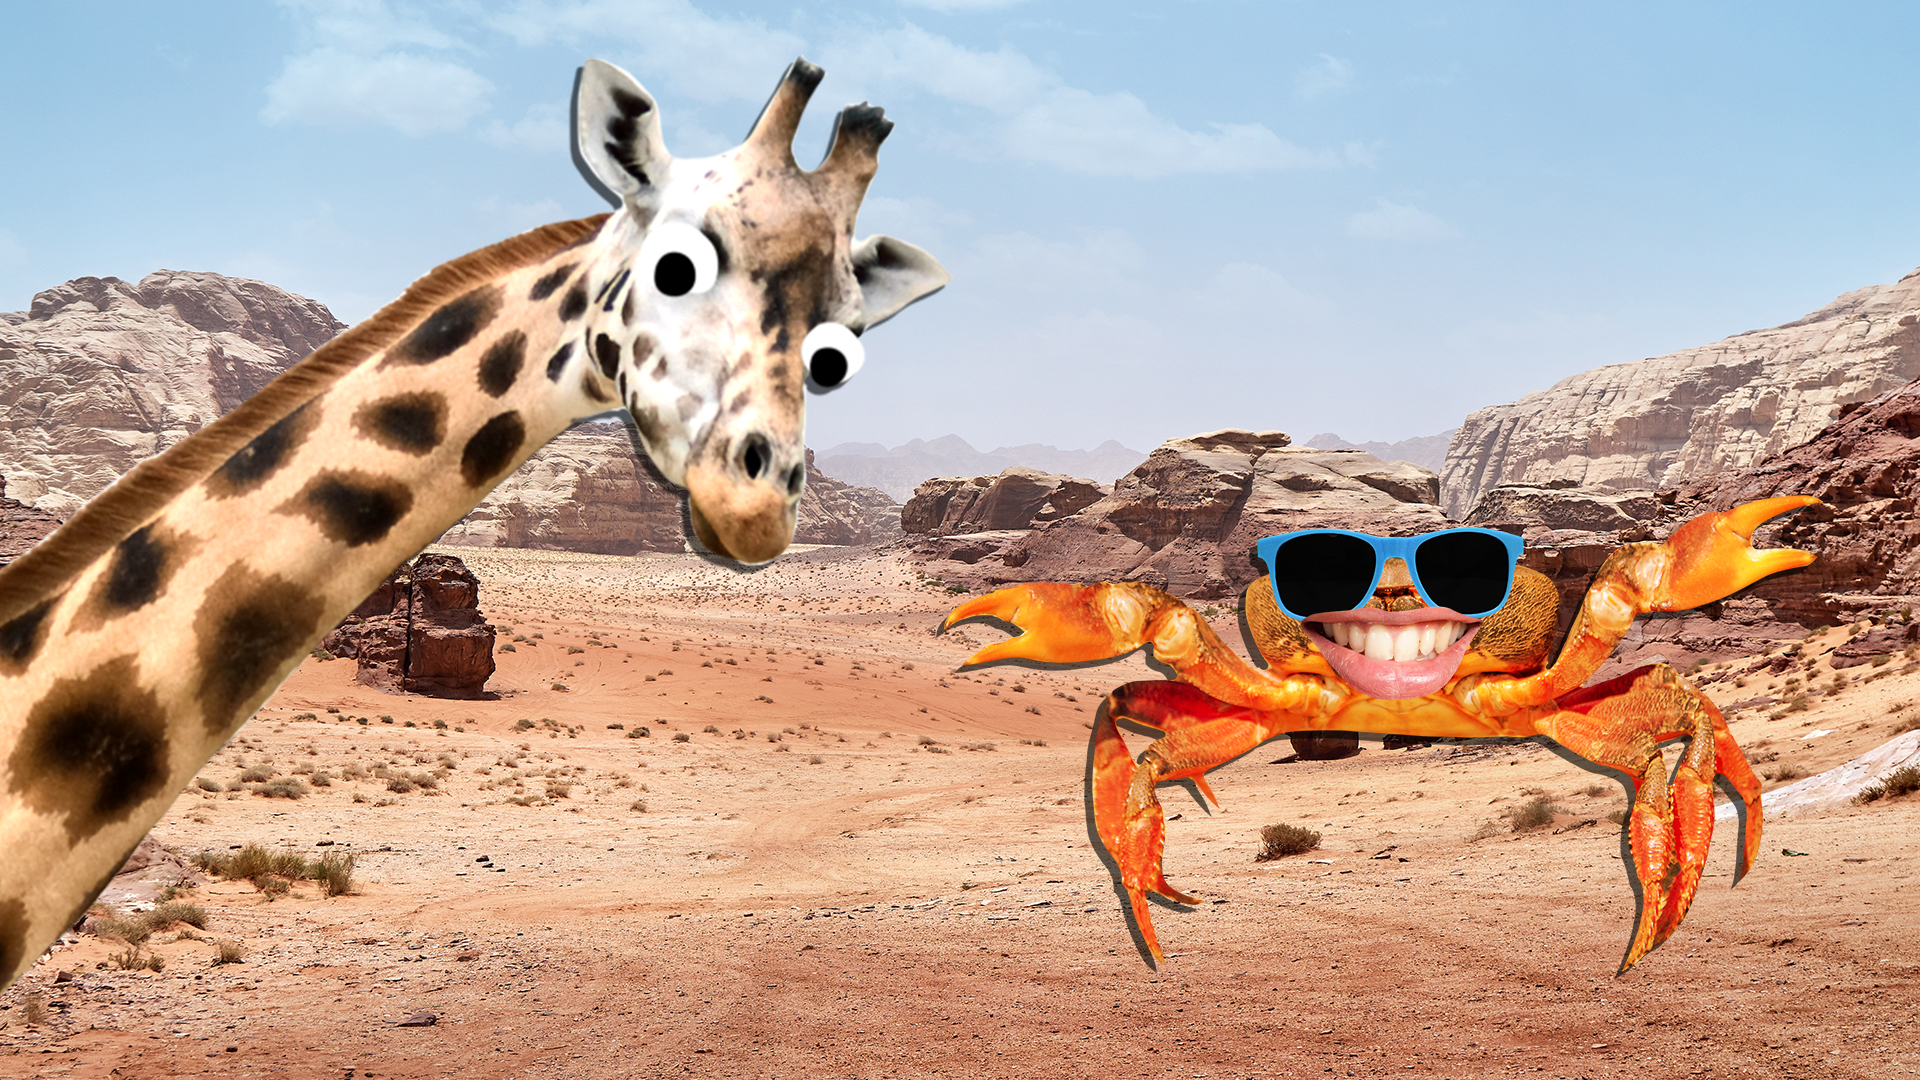 Crab and giraffe in the desert